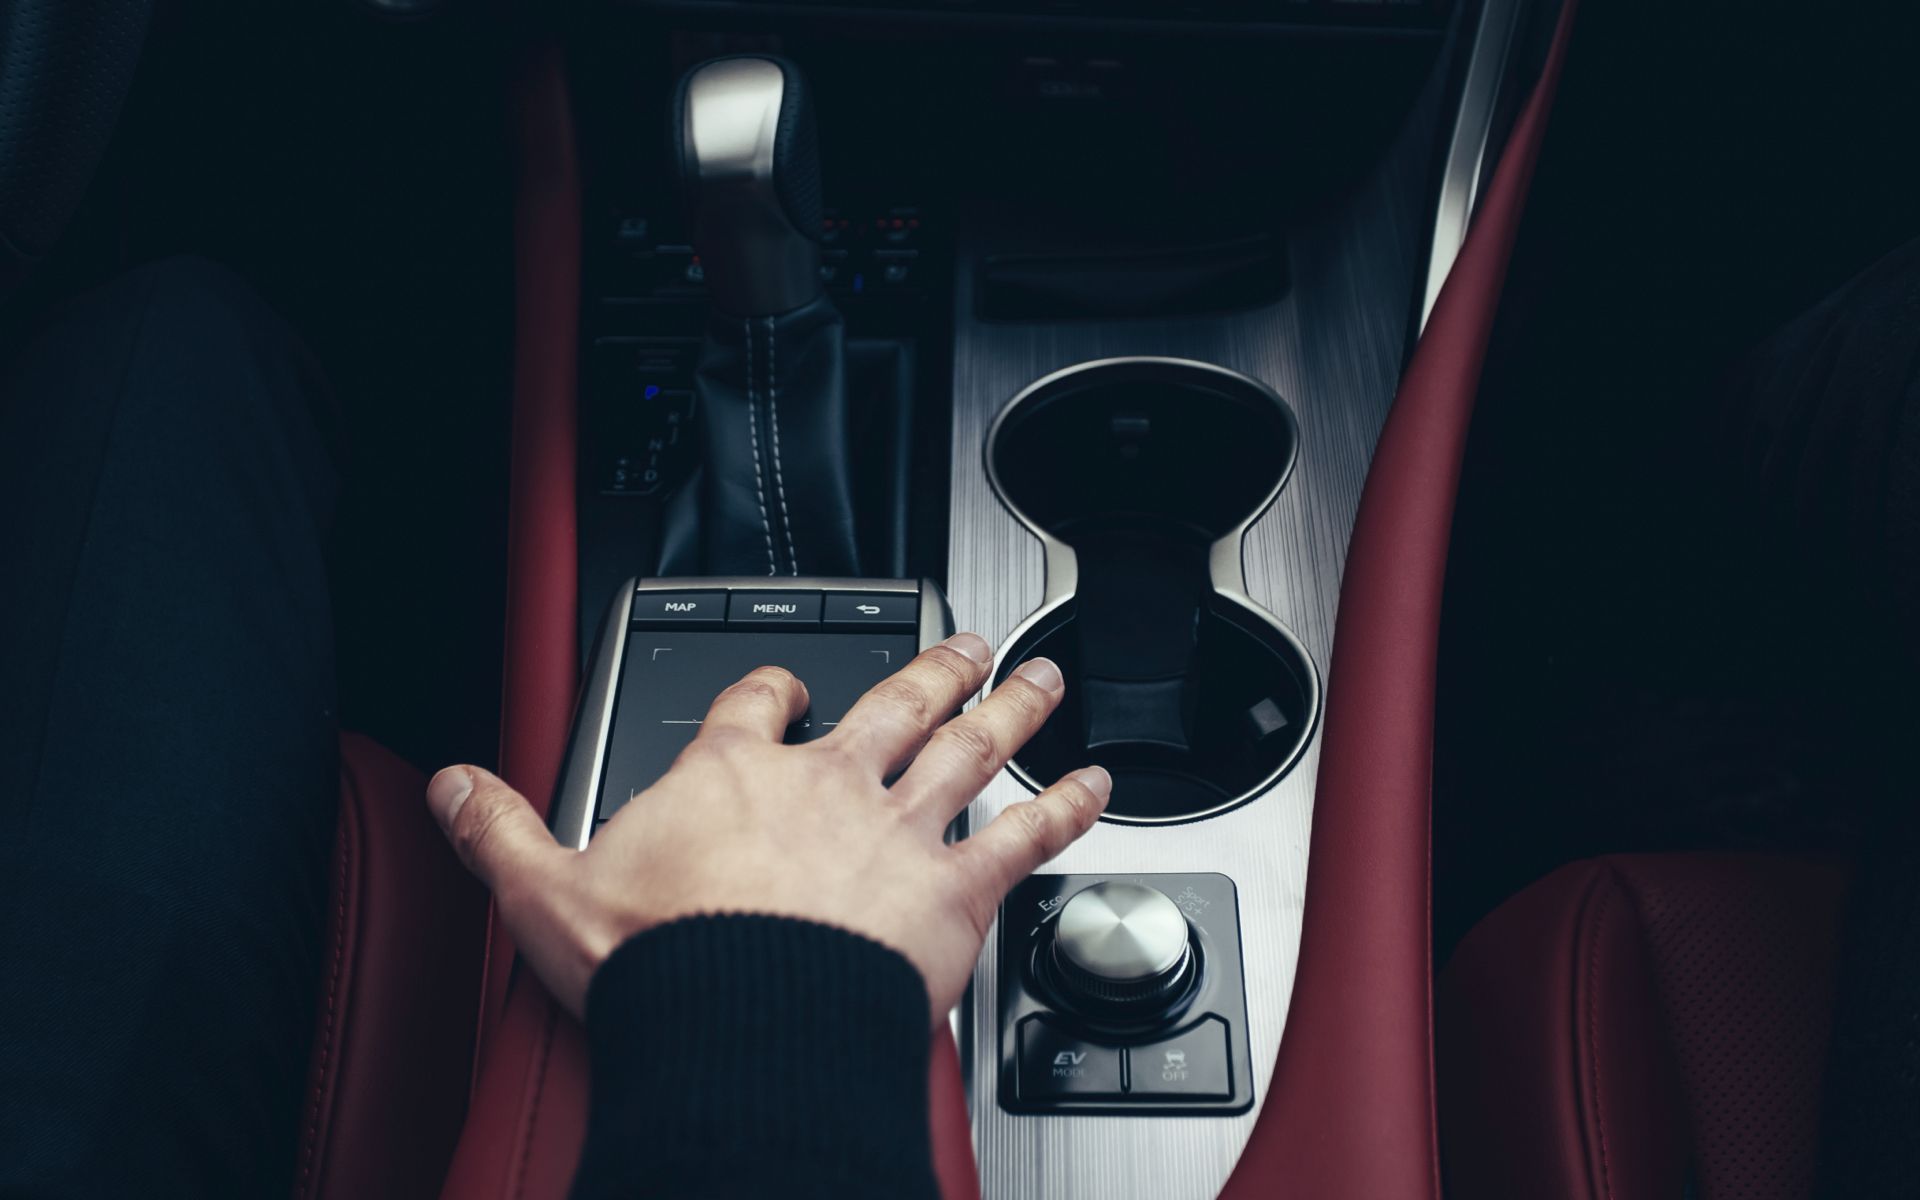 Lexus 2022 Rx Remote Touch Interfa